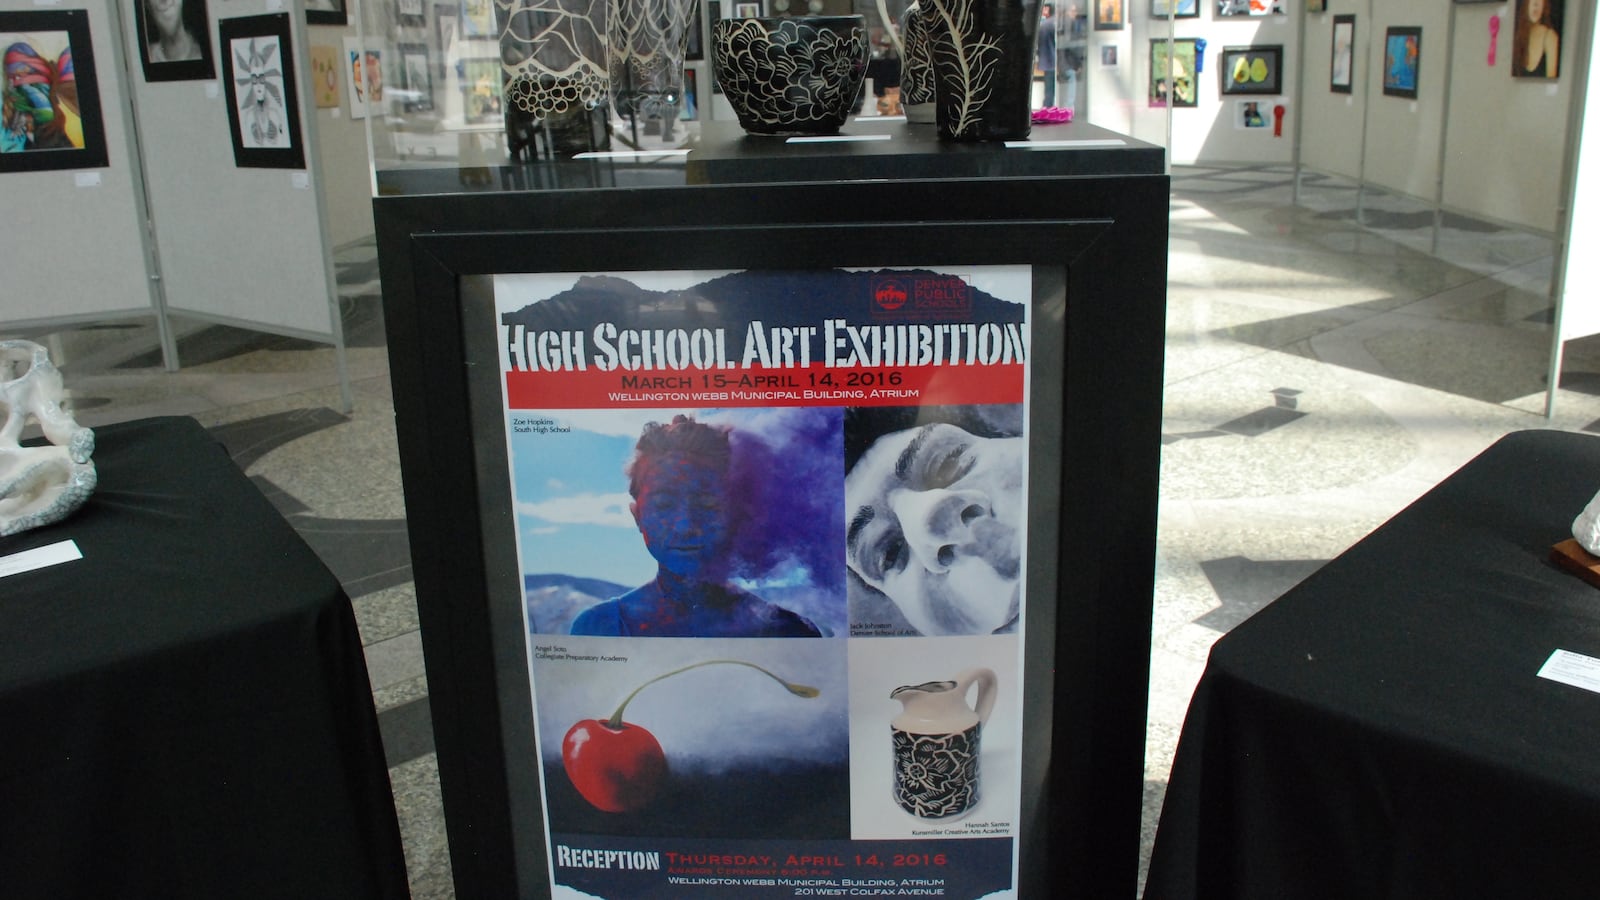 The student art show runs through April 14.